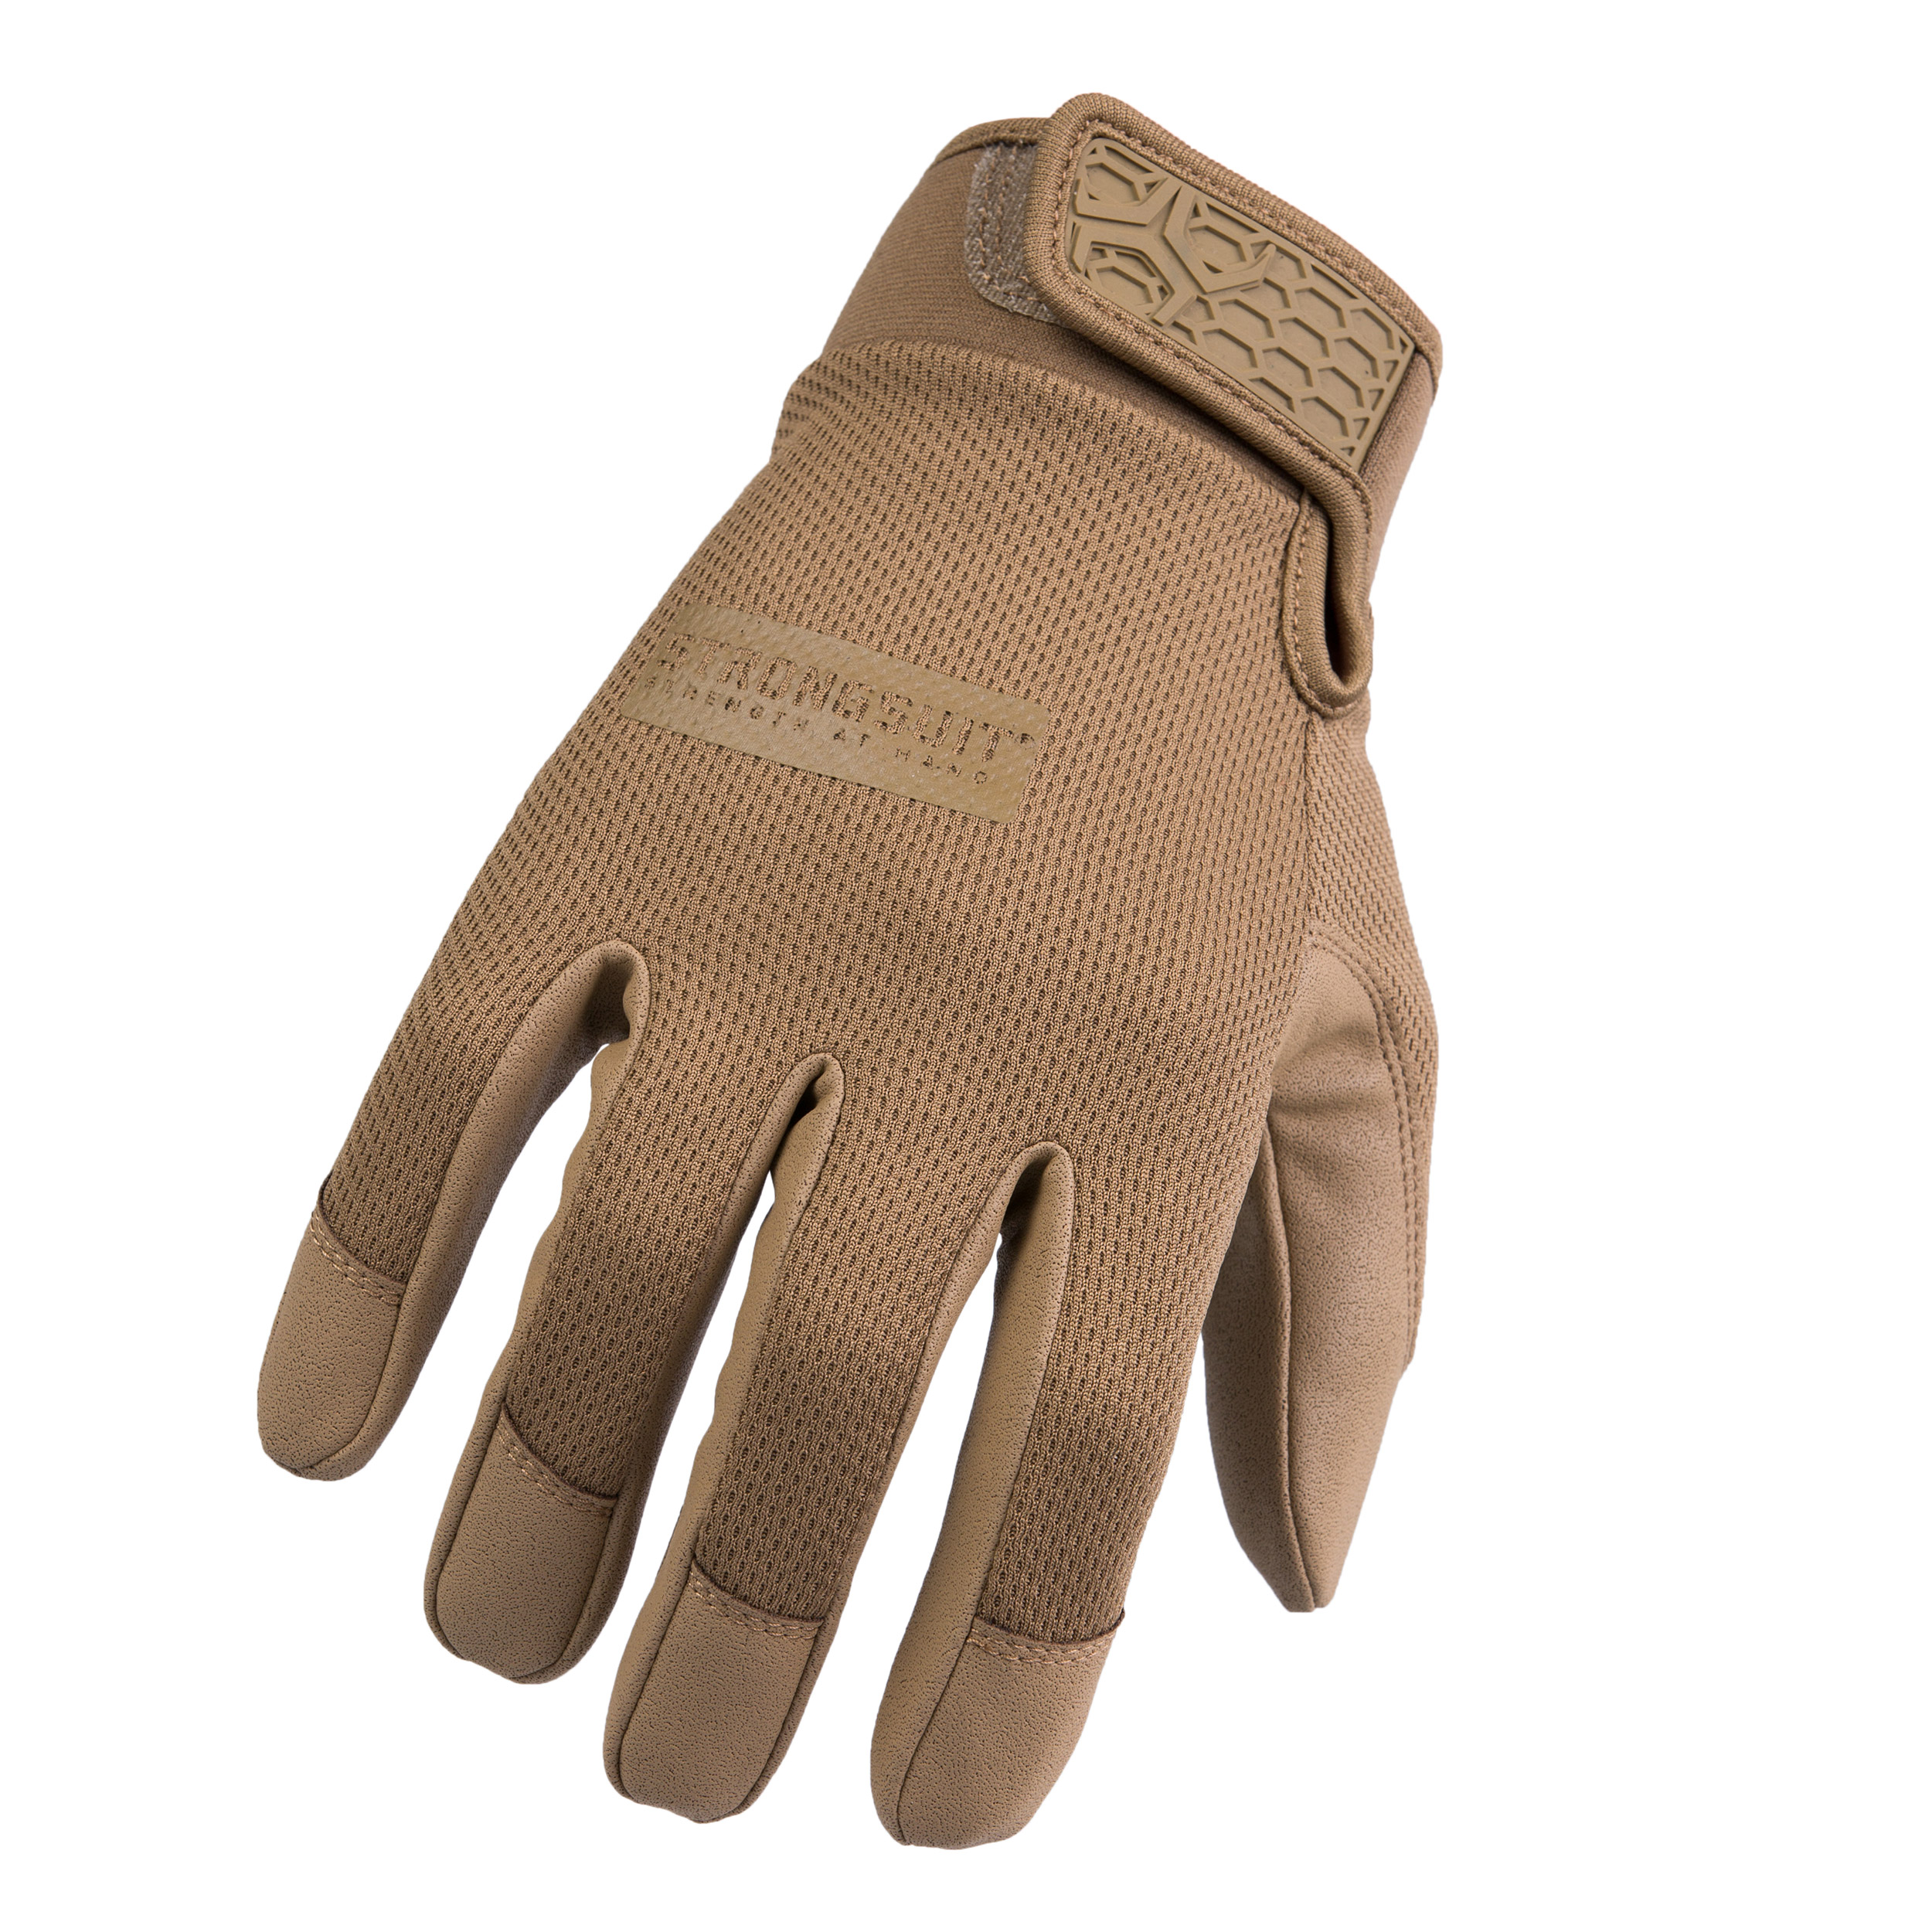 Second Skin Gloves Coyote Gloves Medium